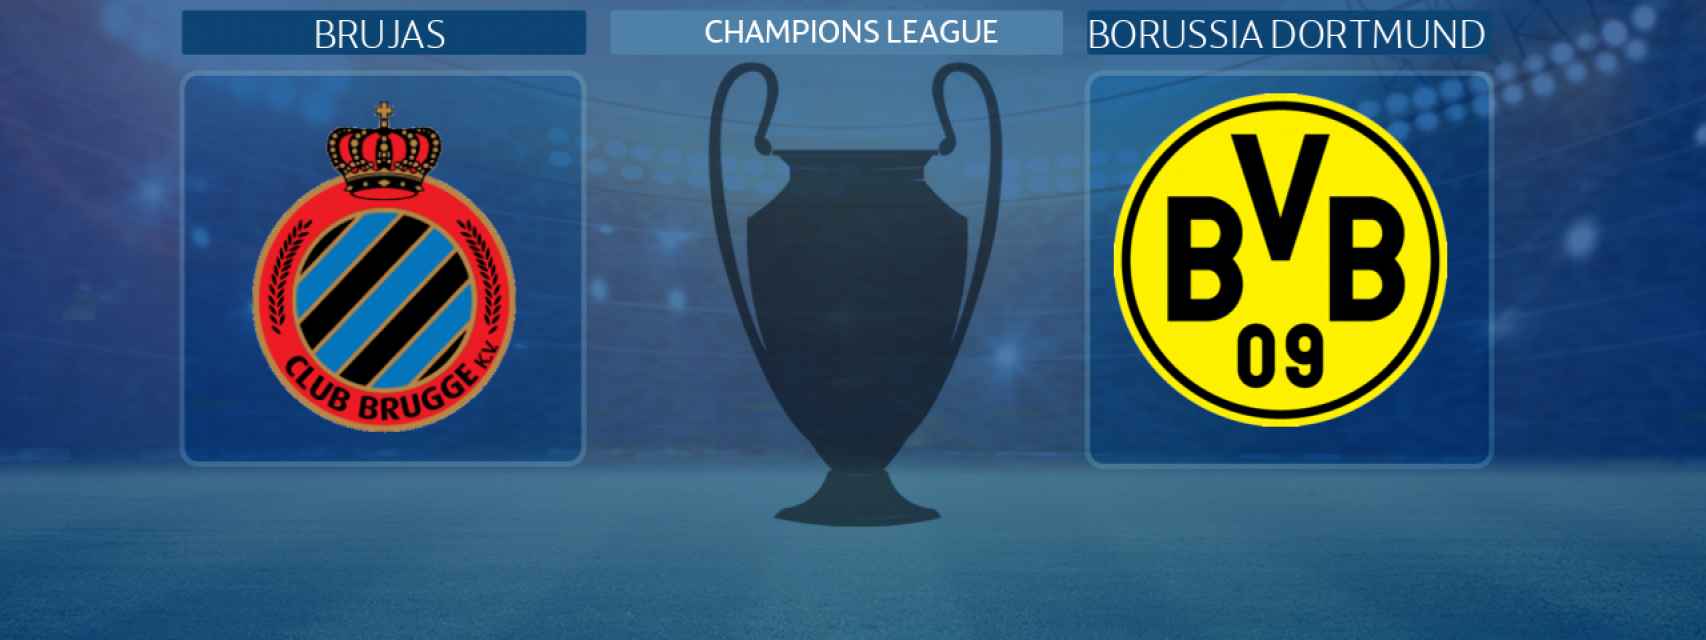 Brujas - Borussia Dortmund, partido de la Champions League